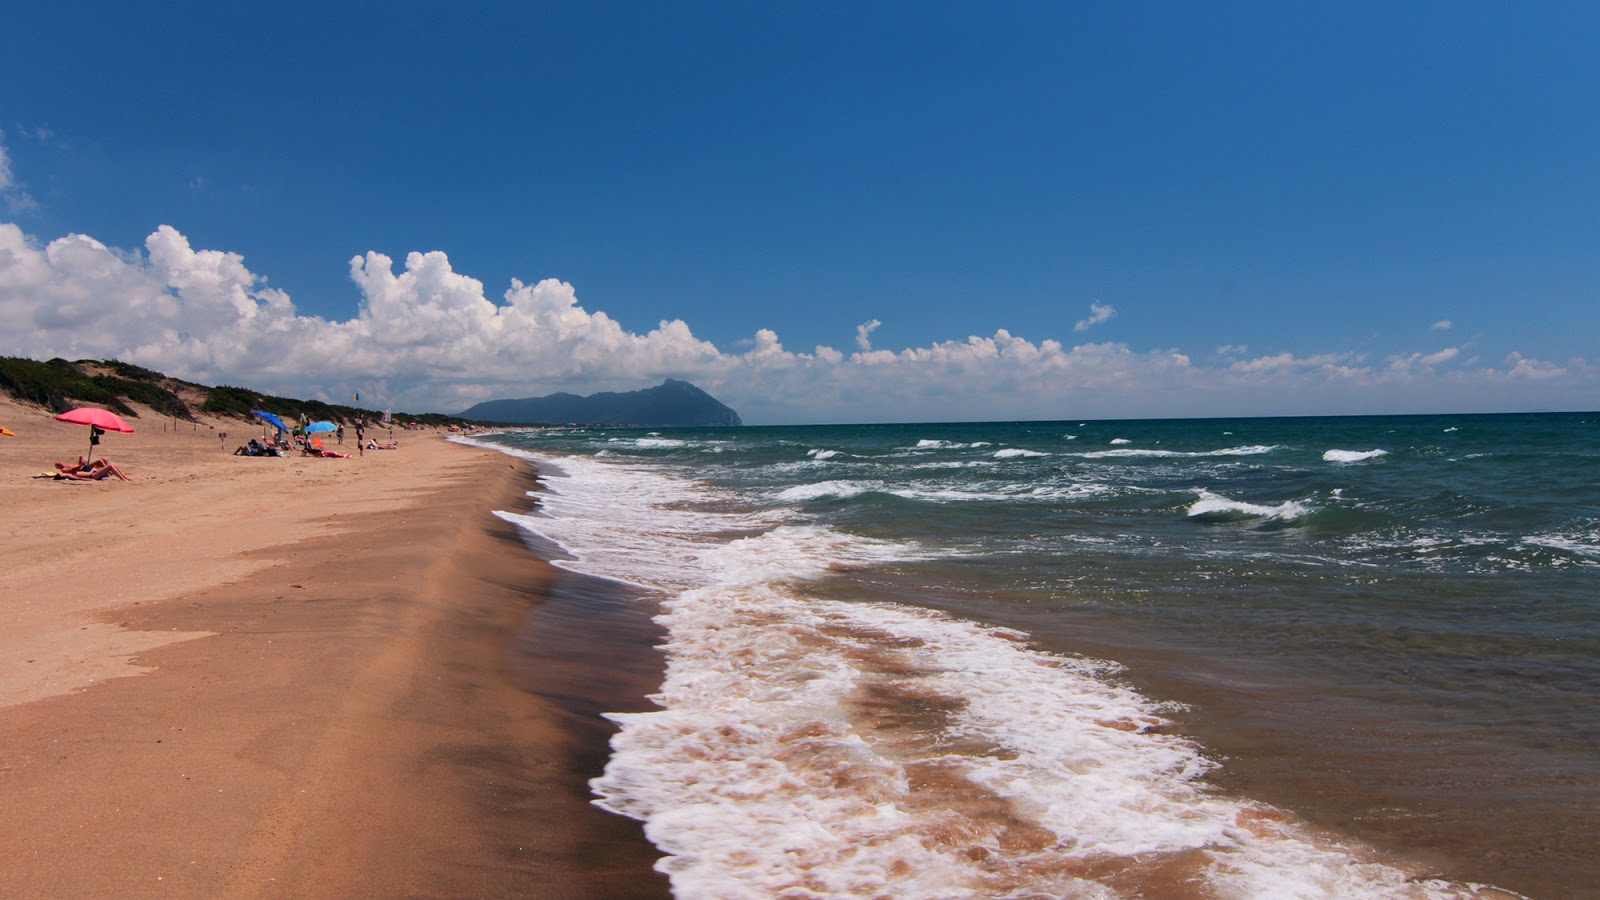 Foto de Spiaggia Sabaudia - lugar popular entre os apreciadores de relaxamento